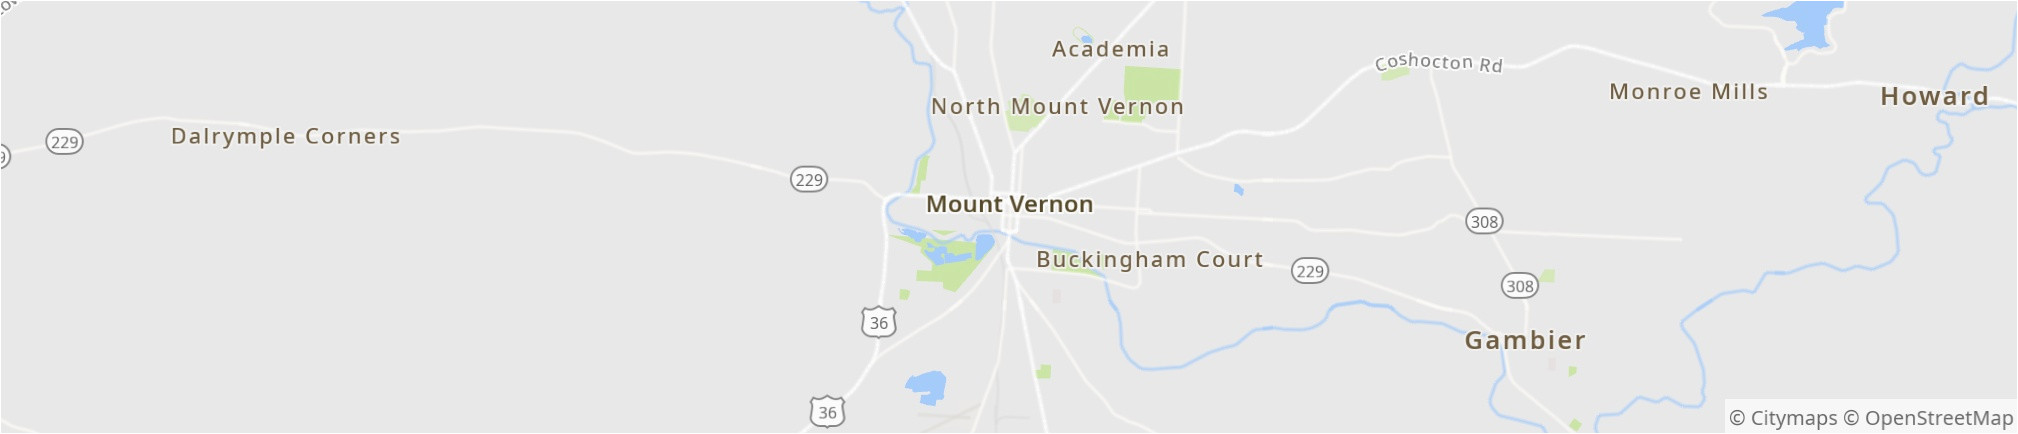 Mt Vernon Ohio Map Mount Vernon 2019 Best Of Mount Vernon Oh tourism Tripadvisor